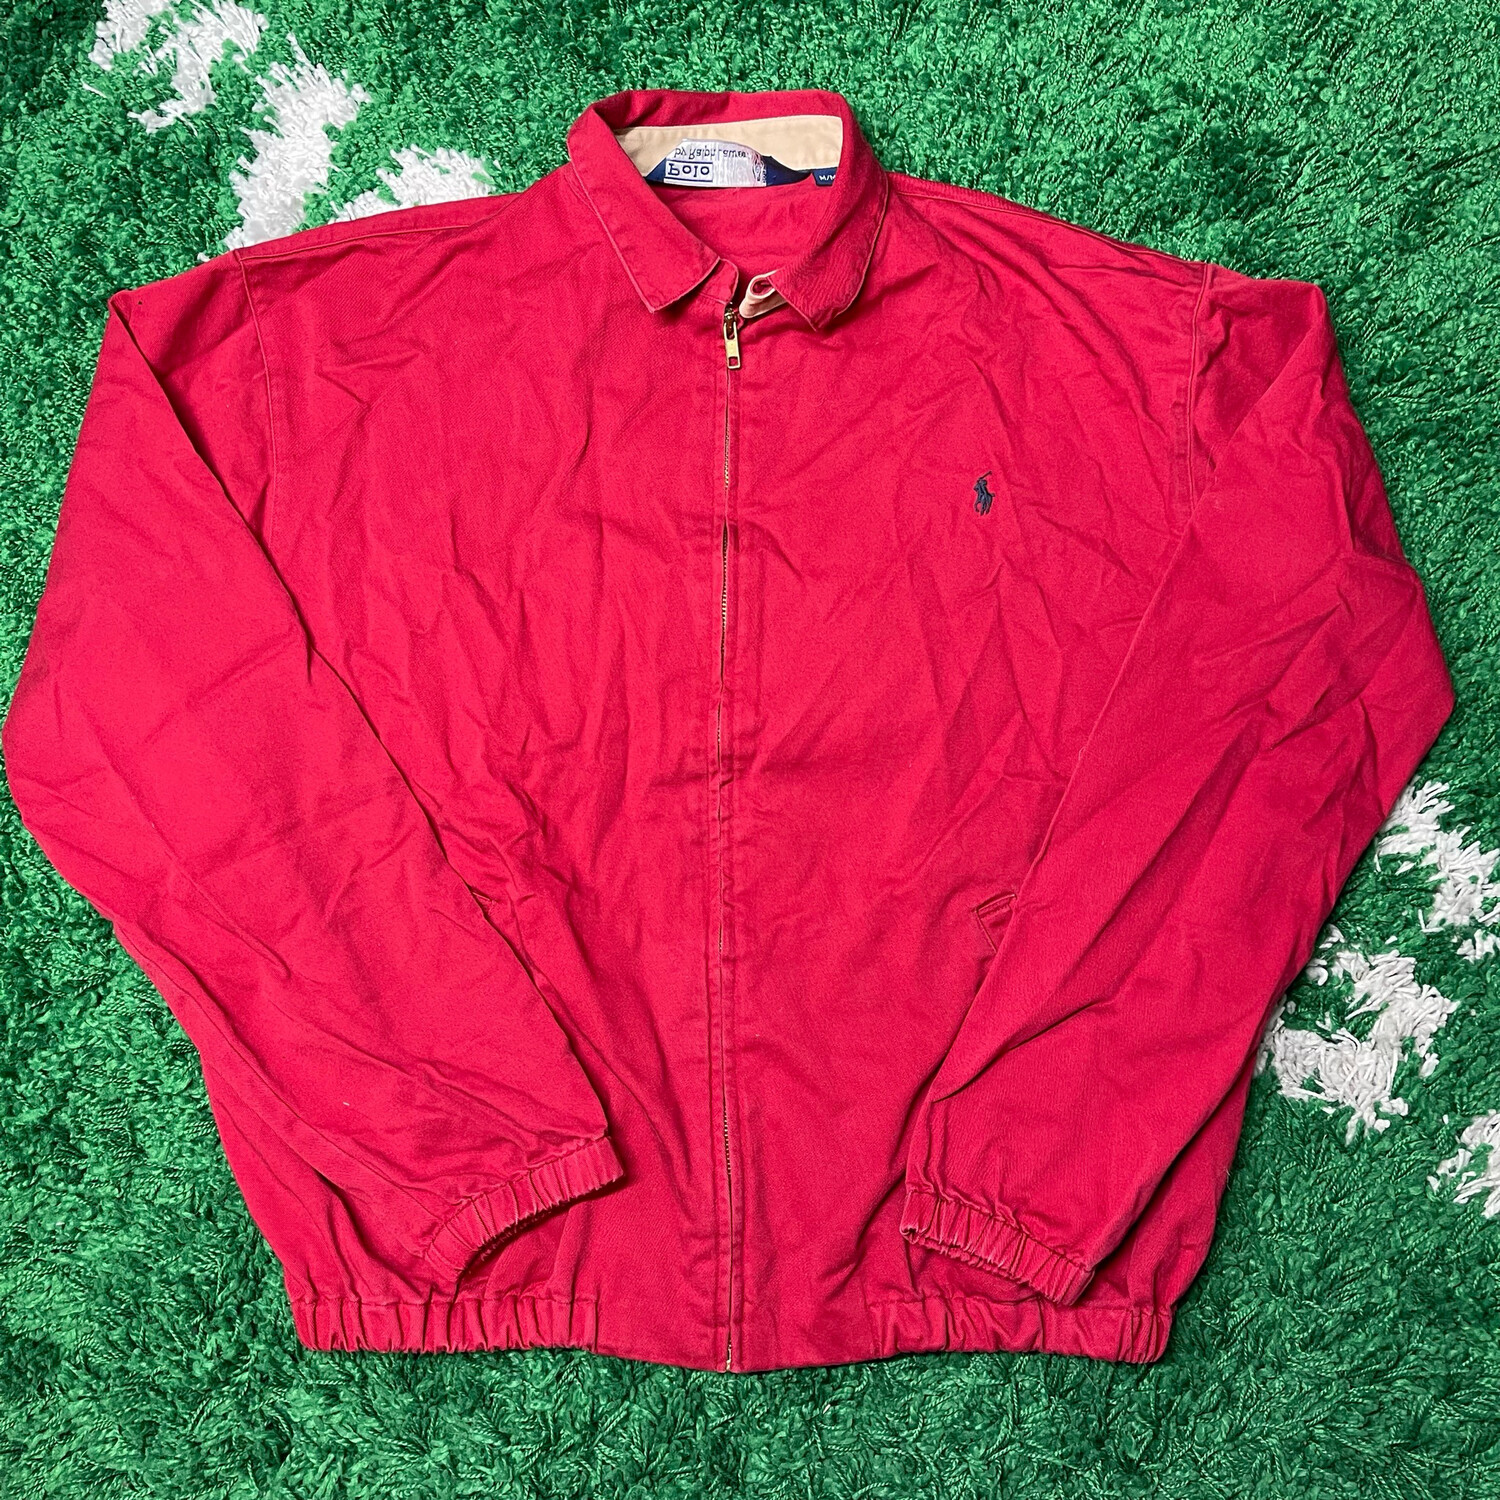 Polo Red Zip Up Jacket Size Medium